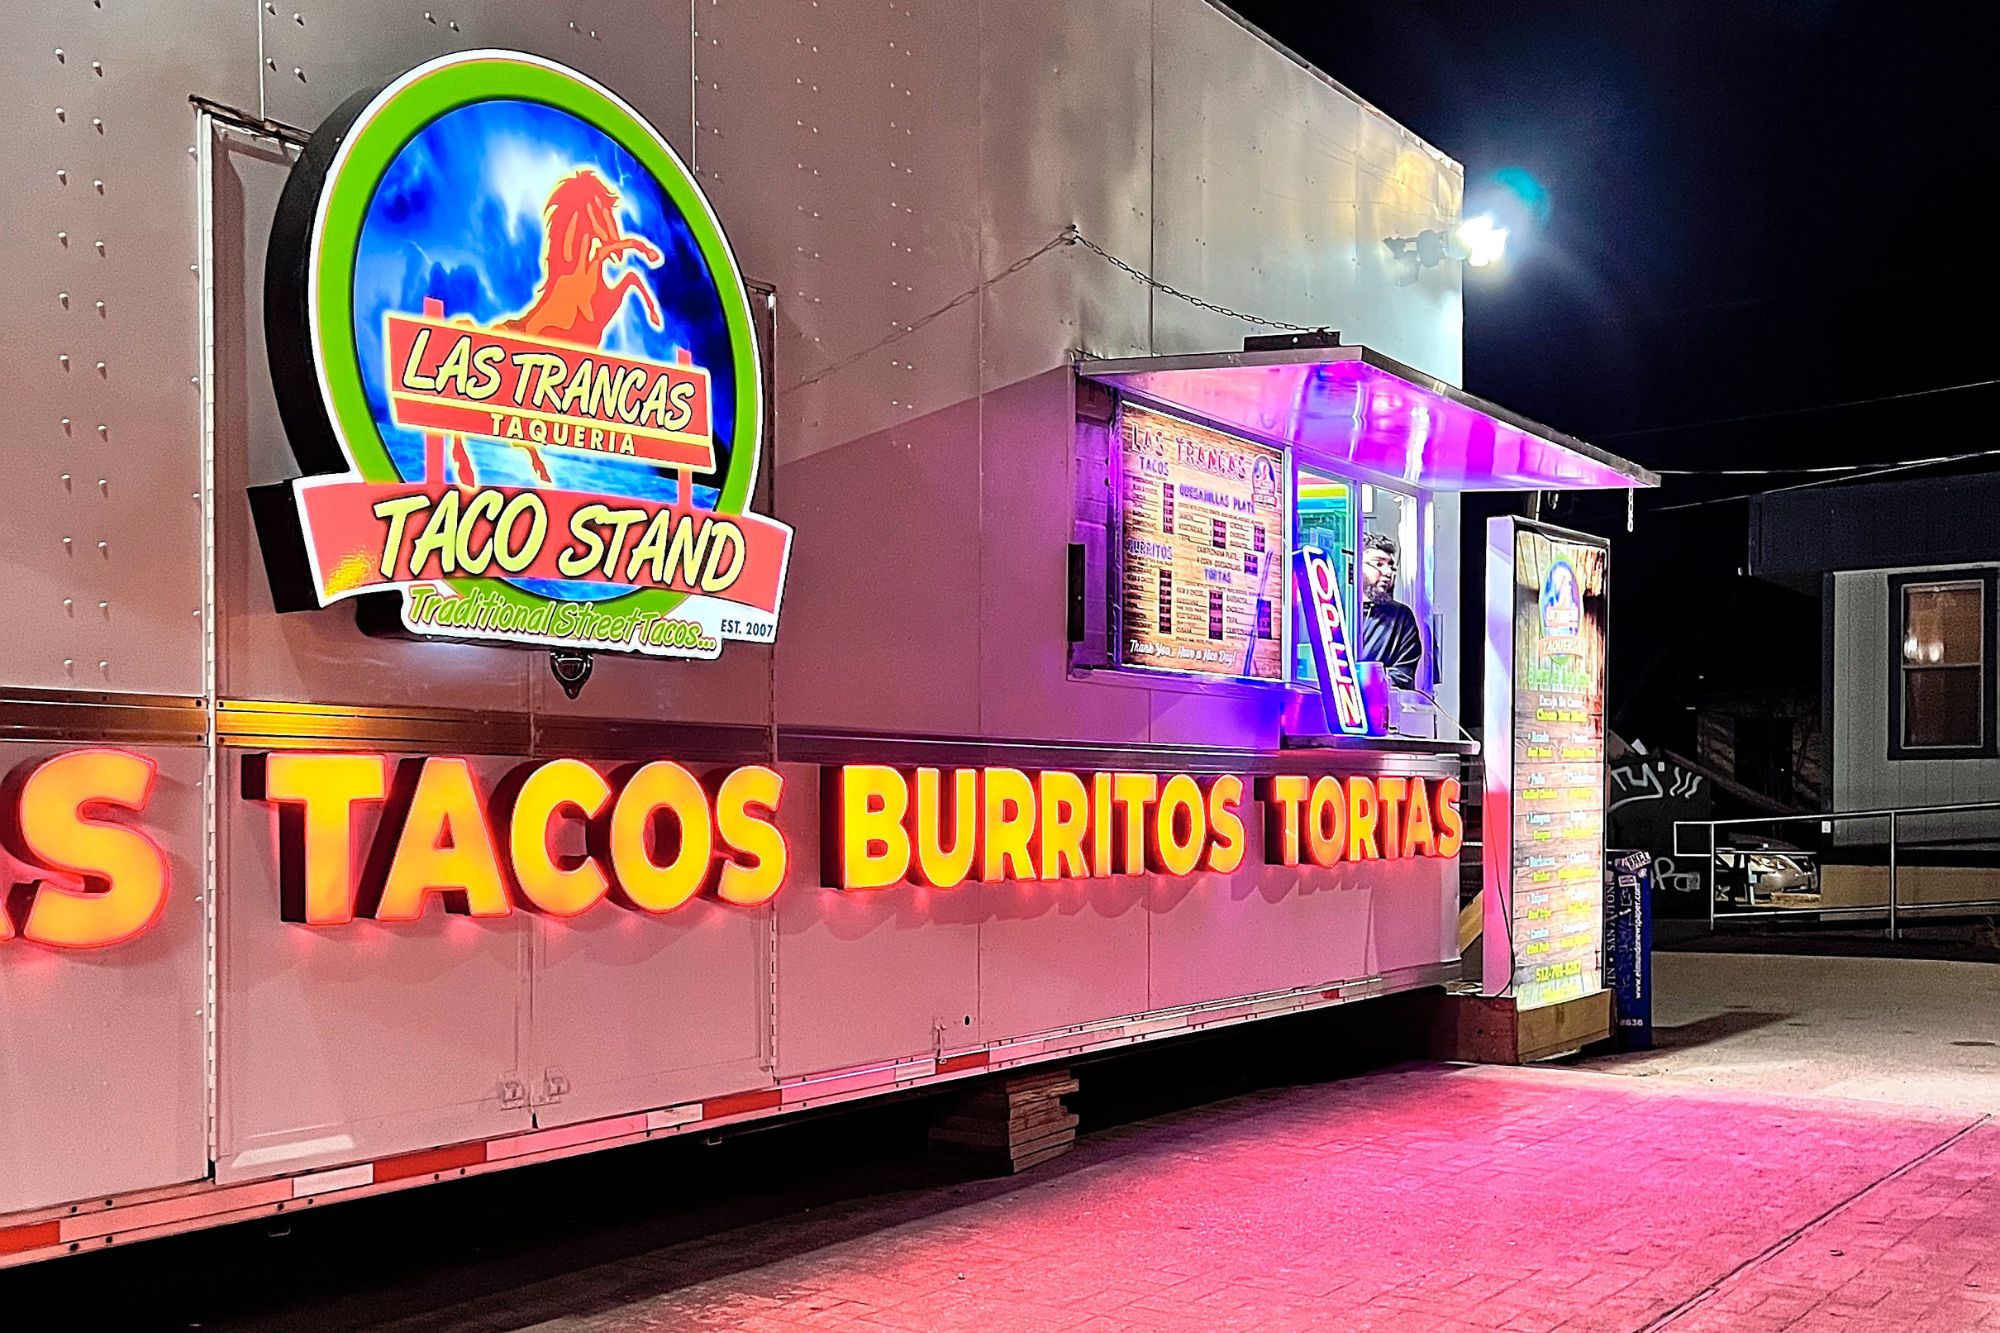 Las Trancas Taco Stand in Austin